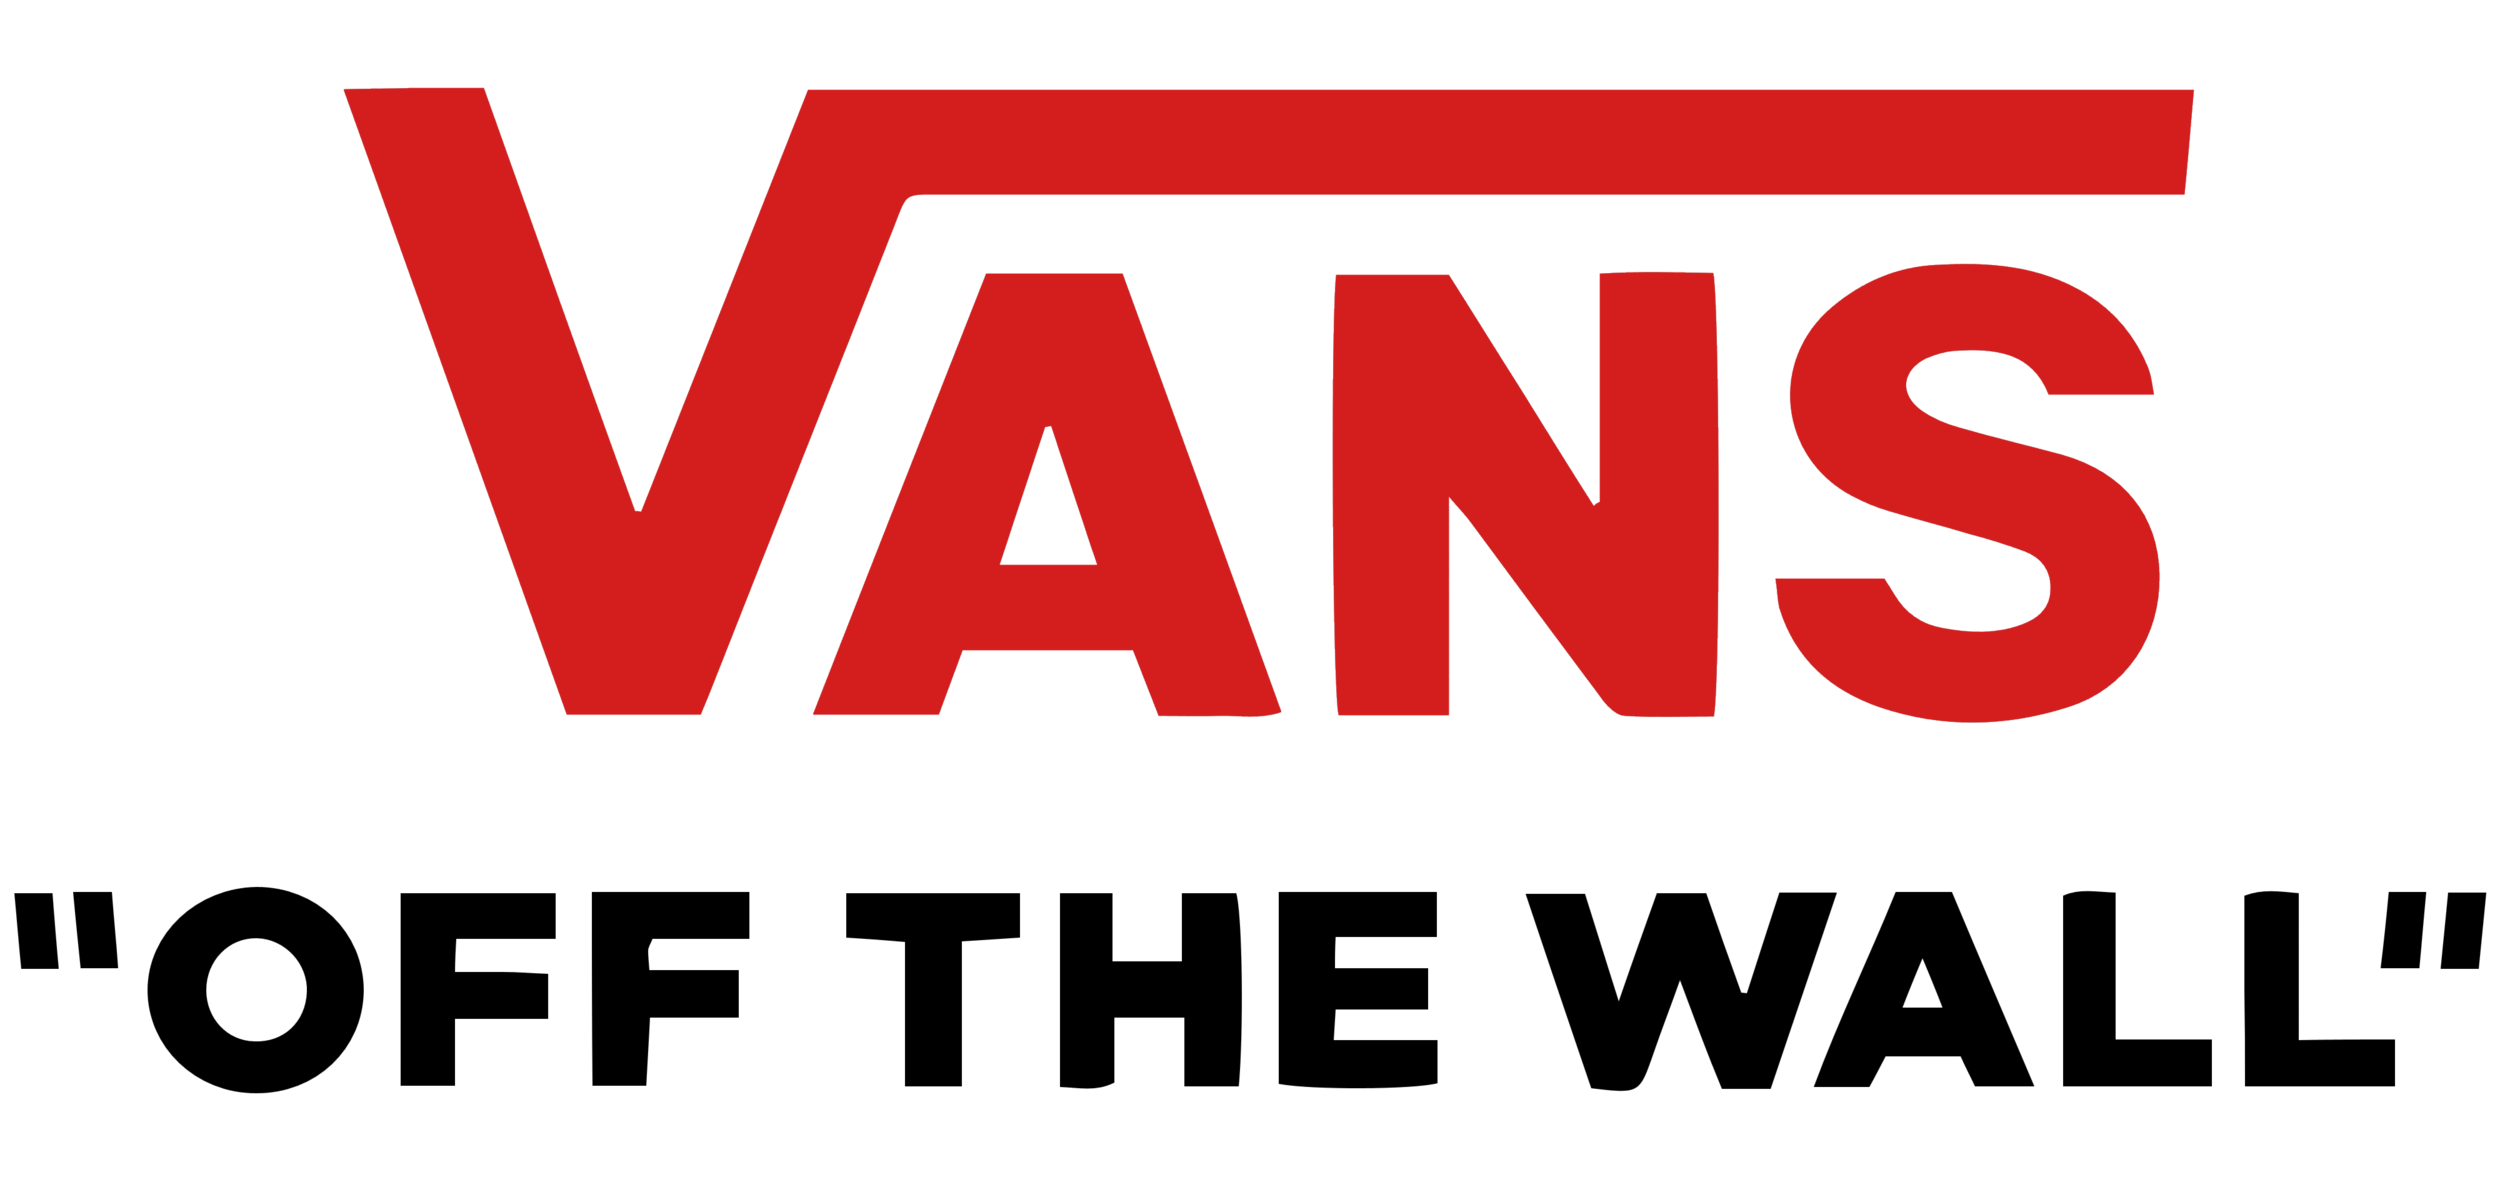 Vans_logo.png